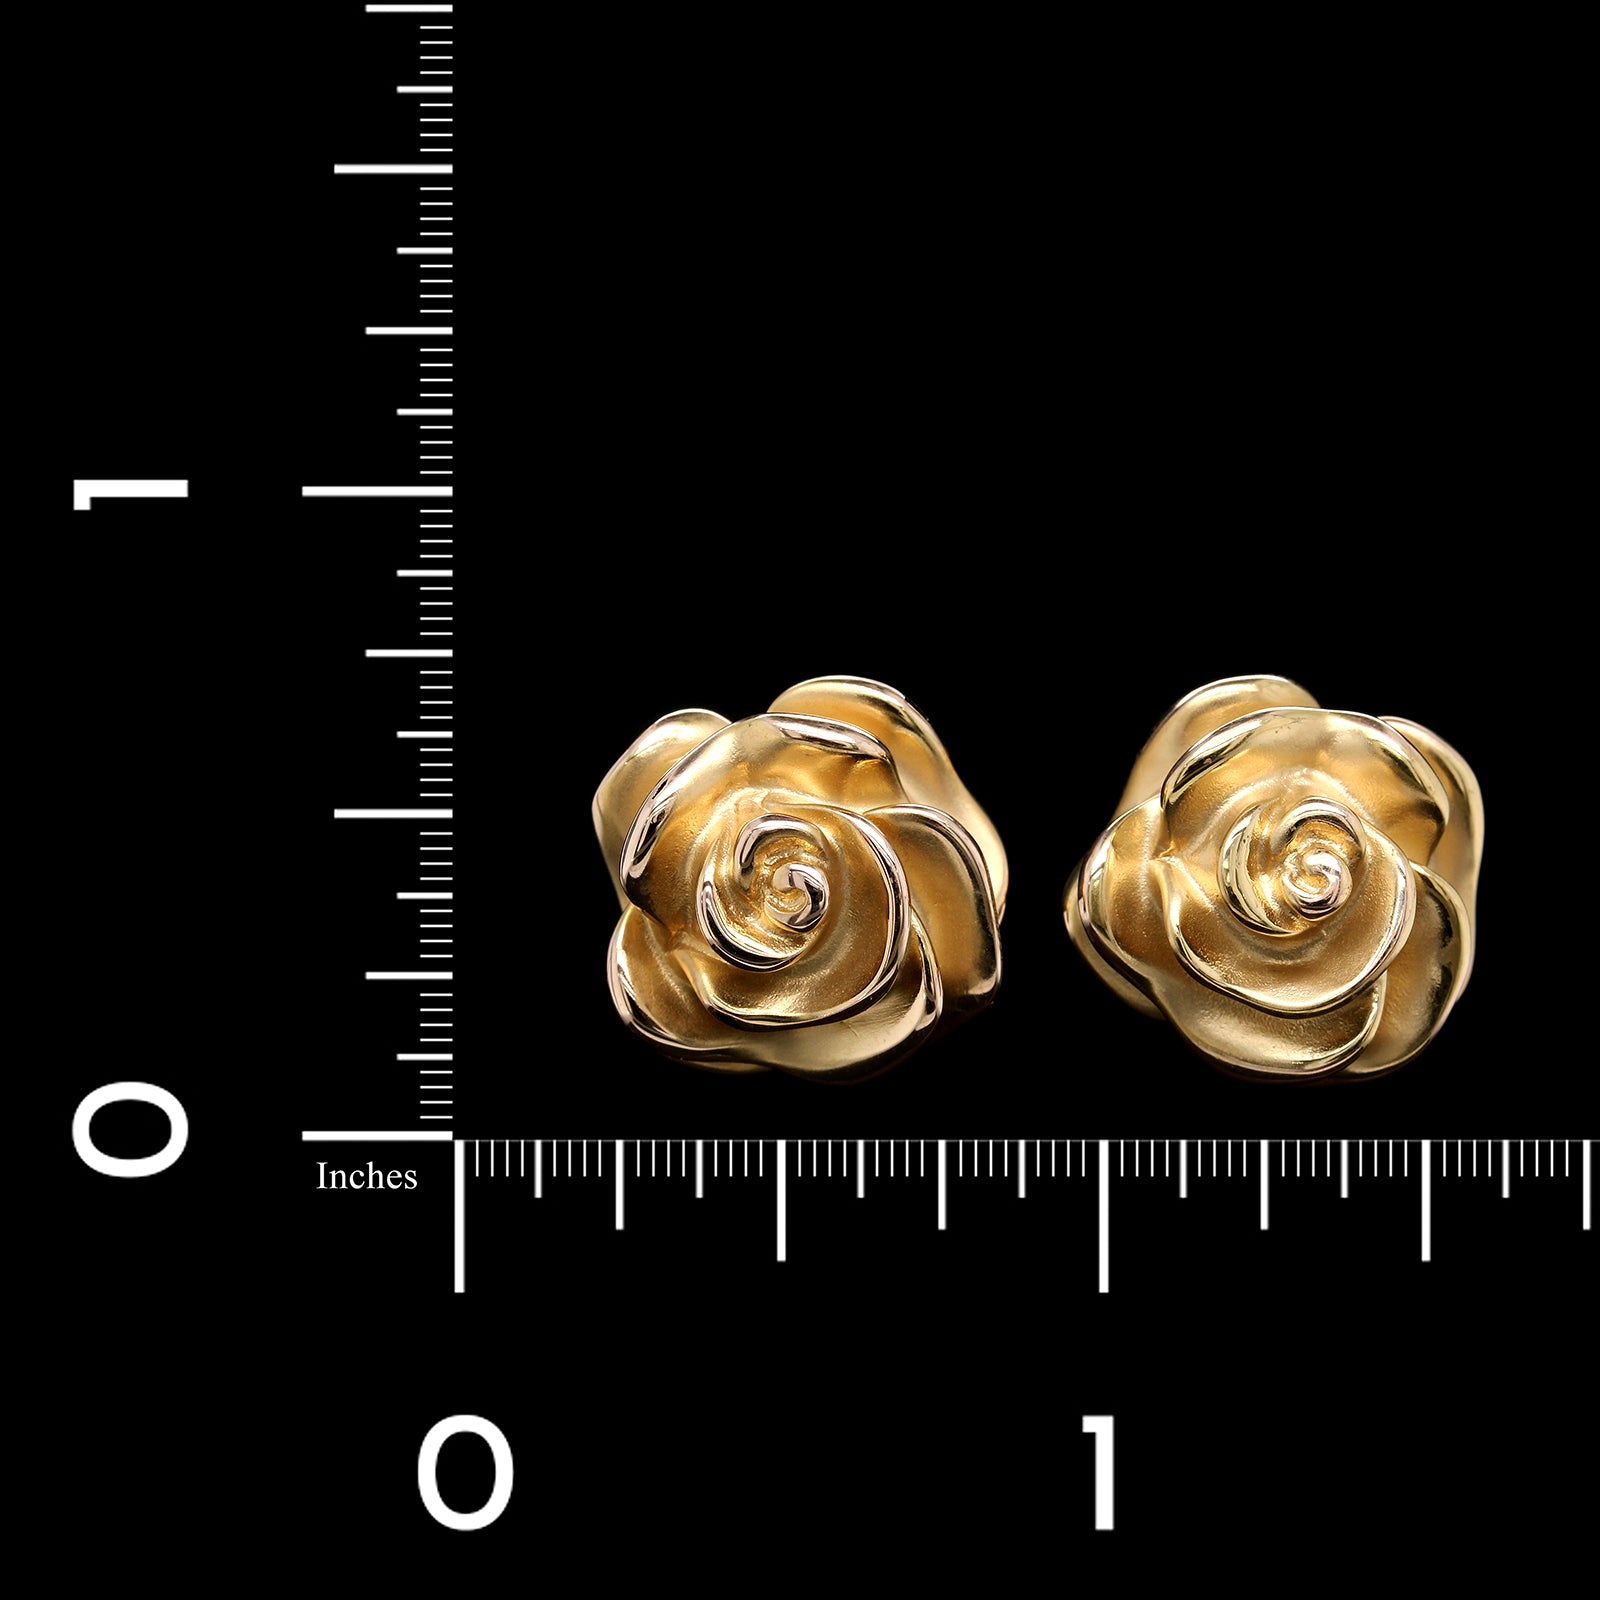 14K Yellow Gold Estate Flower Earrings